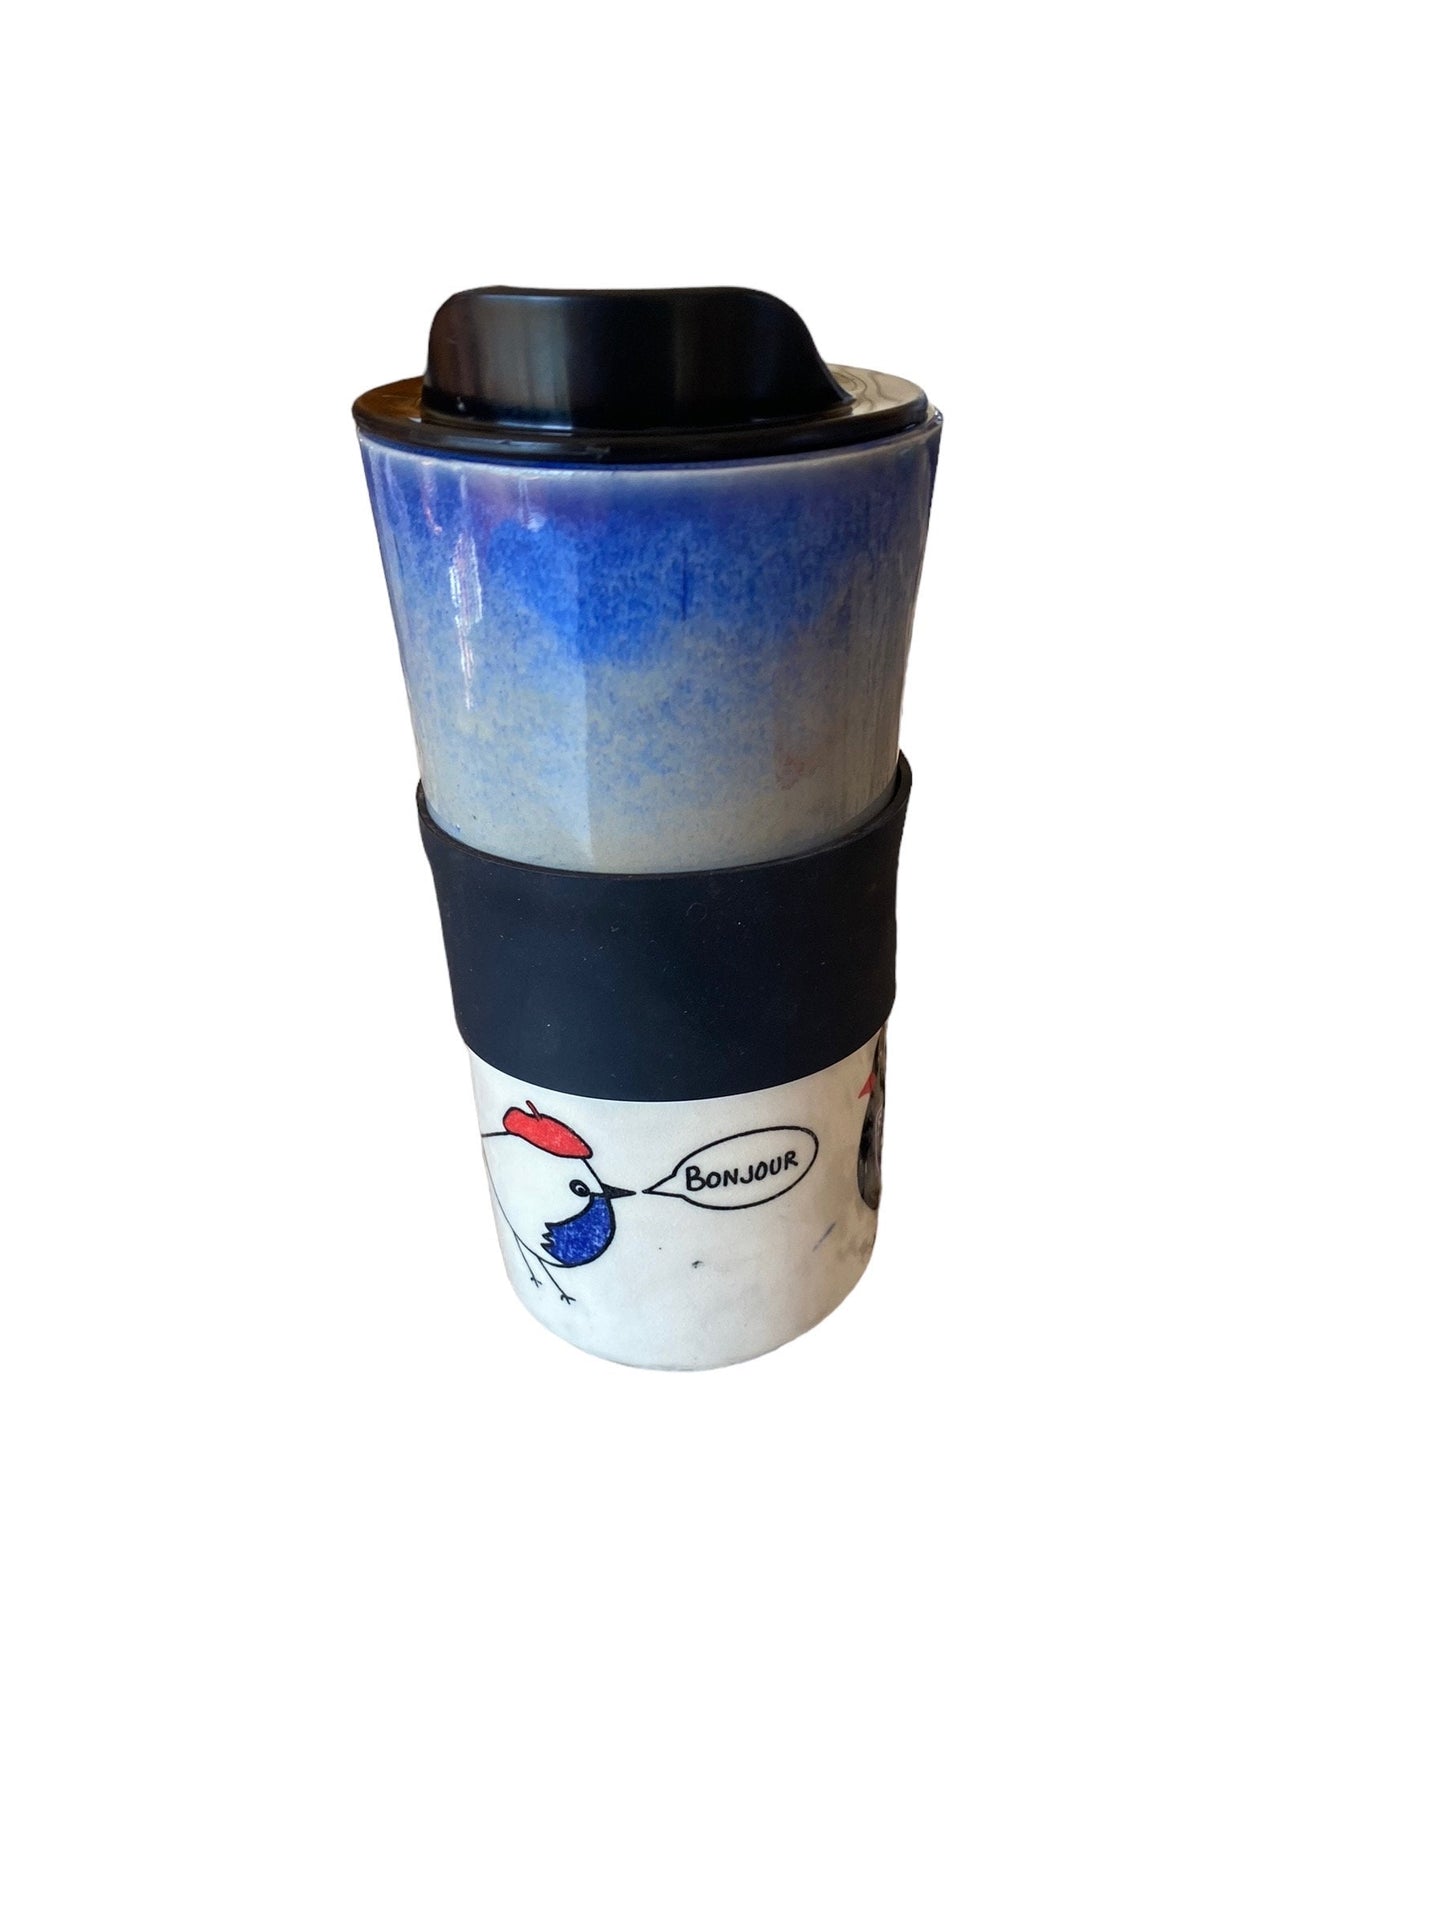 Handmade 16-Ounce Travel Mug Embellished with Birds - Stylish Pottery Mug for Your Coffee Adventures. Includes Locking Lid.